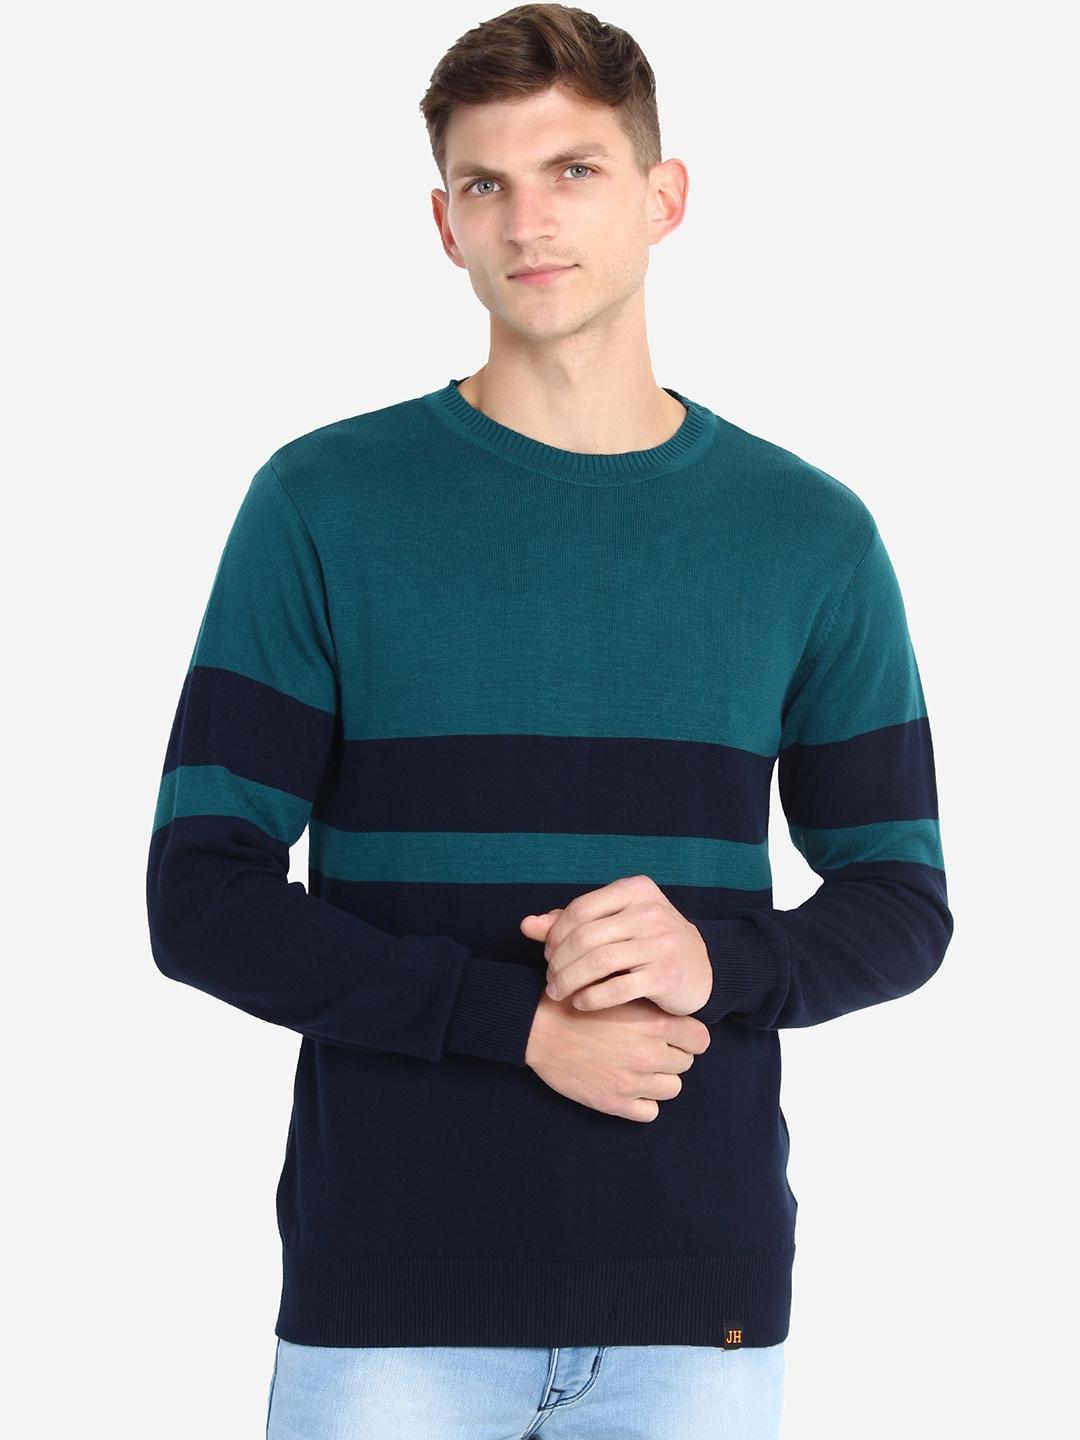 joe-hazel-men-green-&-navy-blue-striped-pure-cotton-pullover